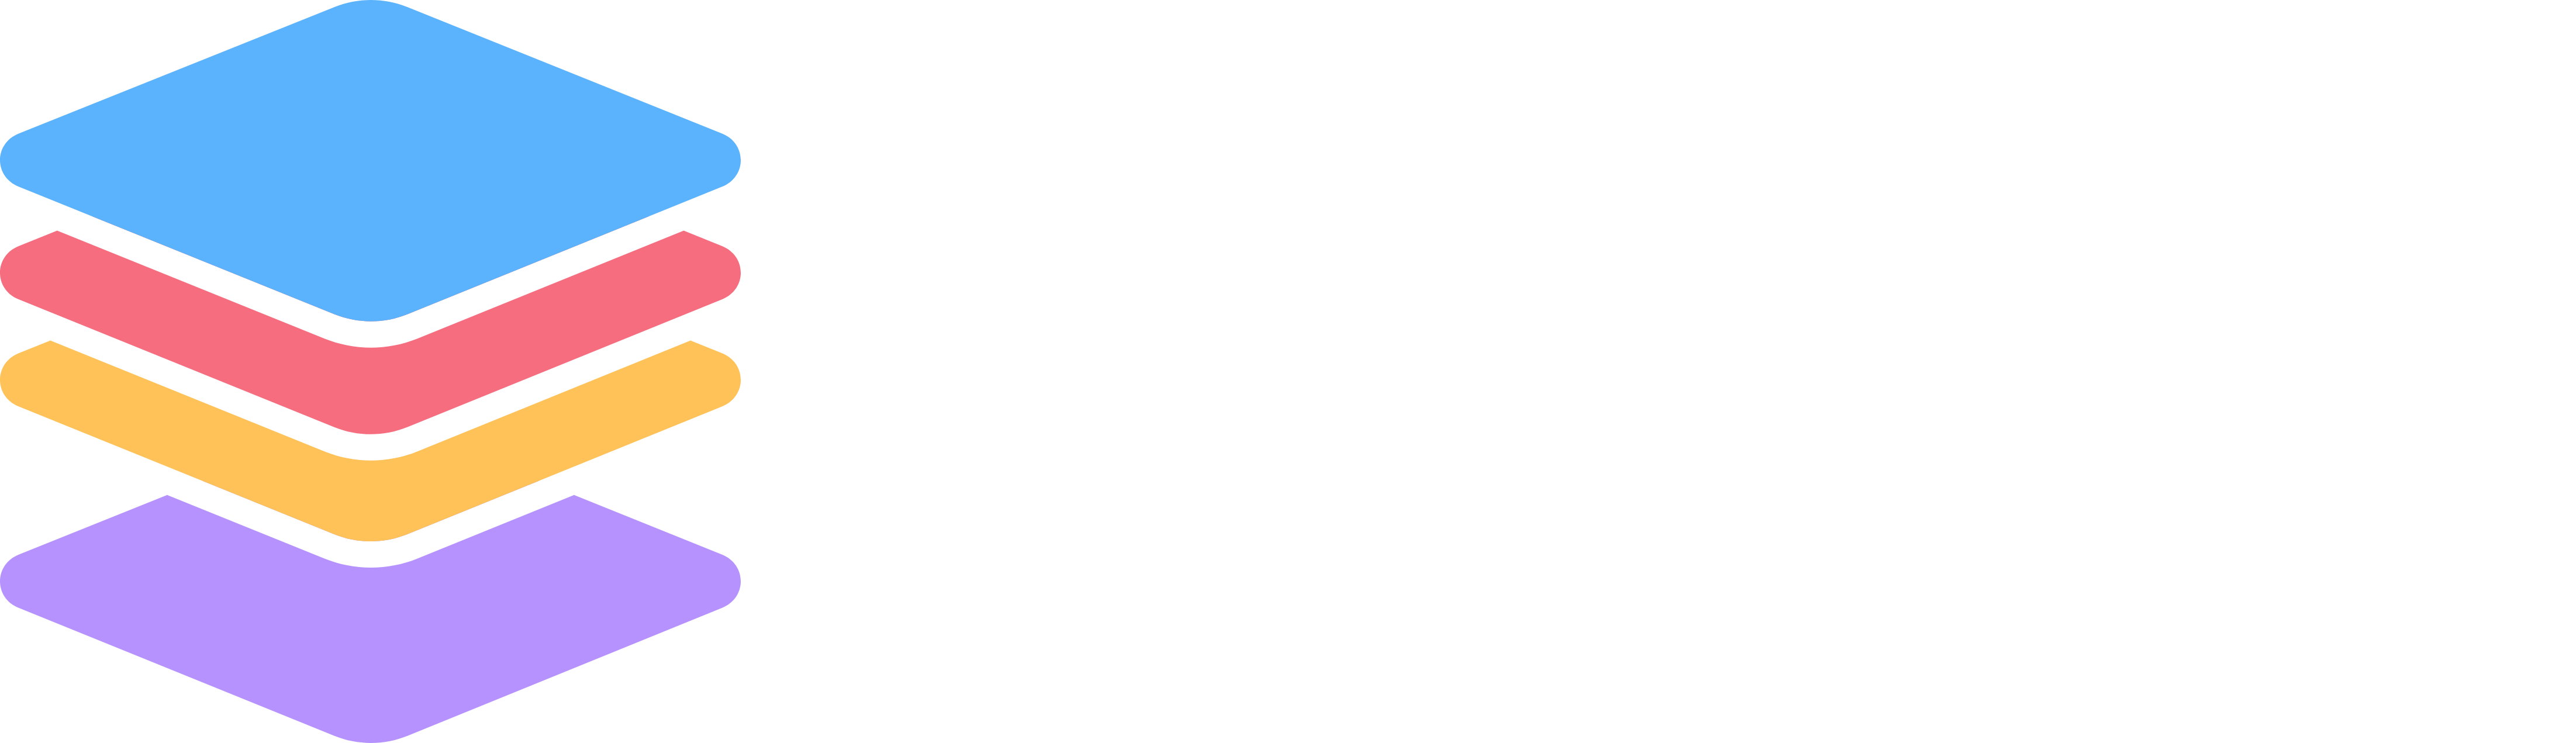 ixlayer logo